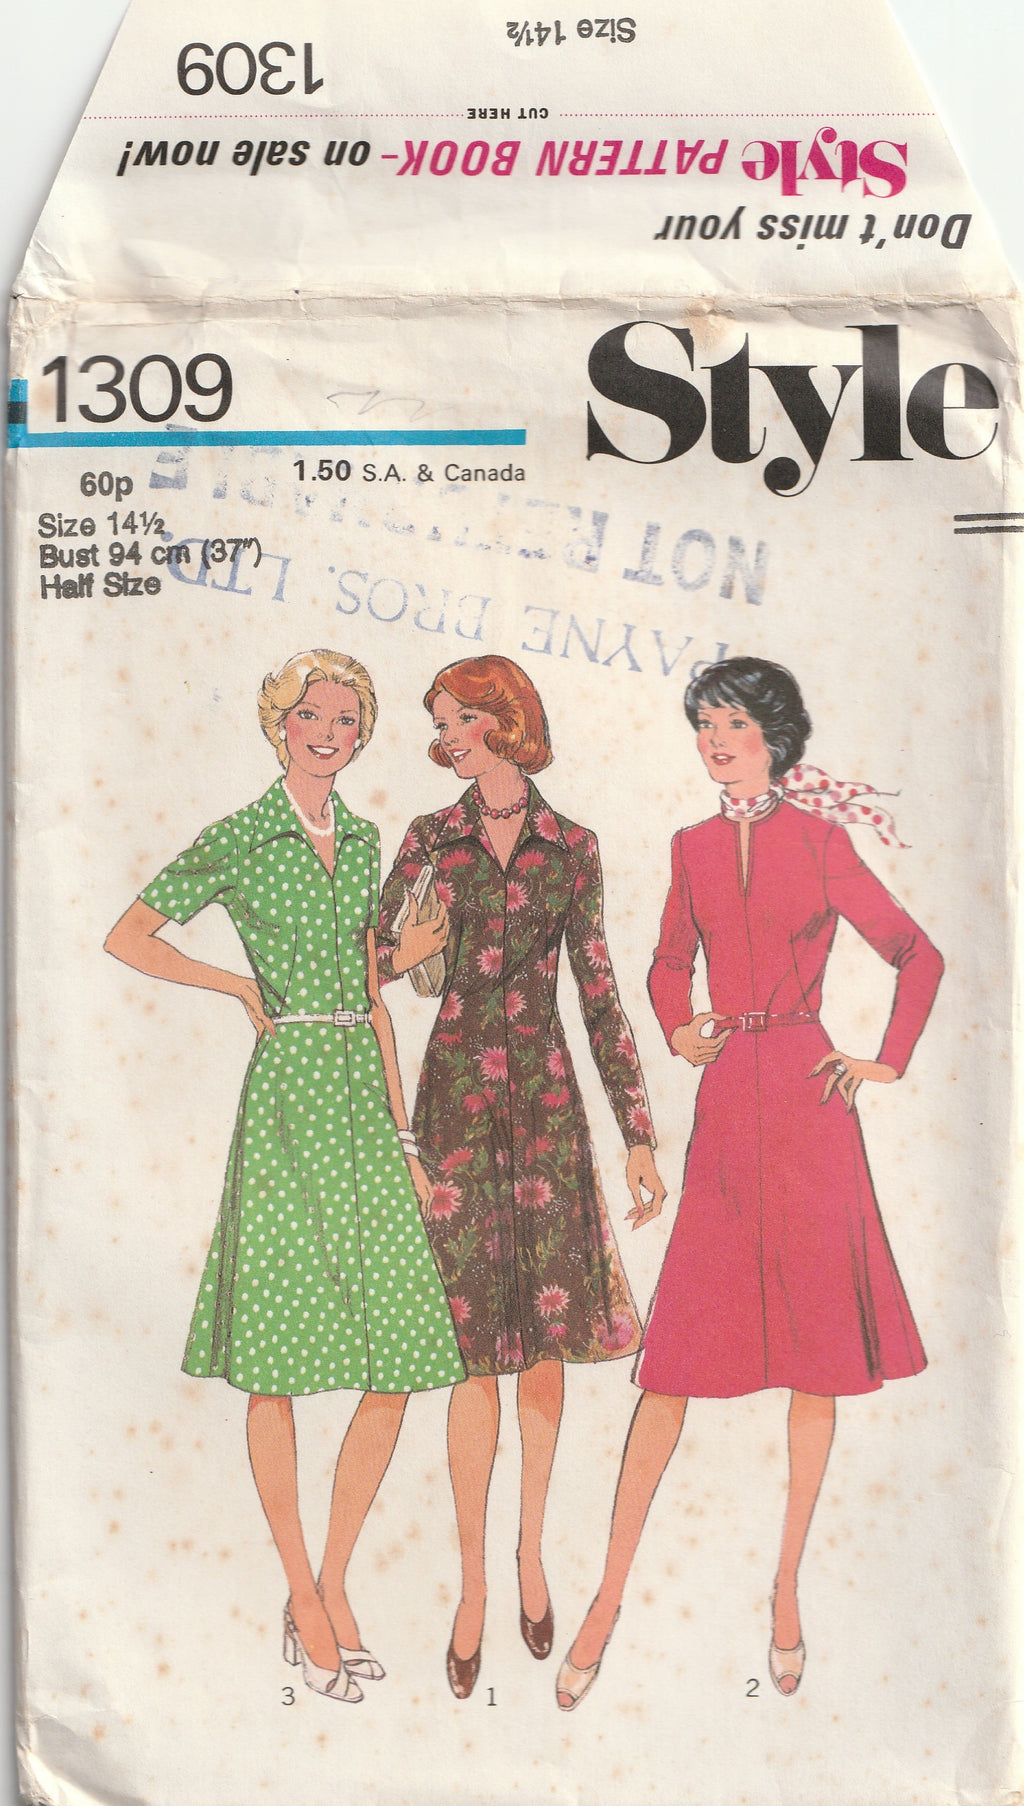 1970s vintage pattern flared dress style 1309 1975 bust 94 cm